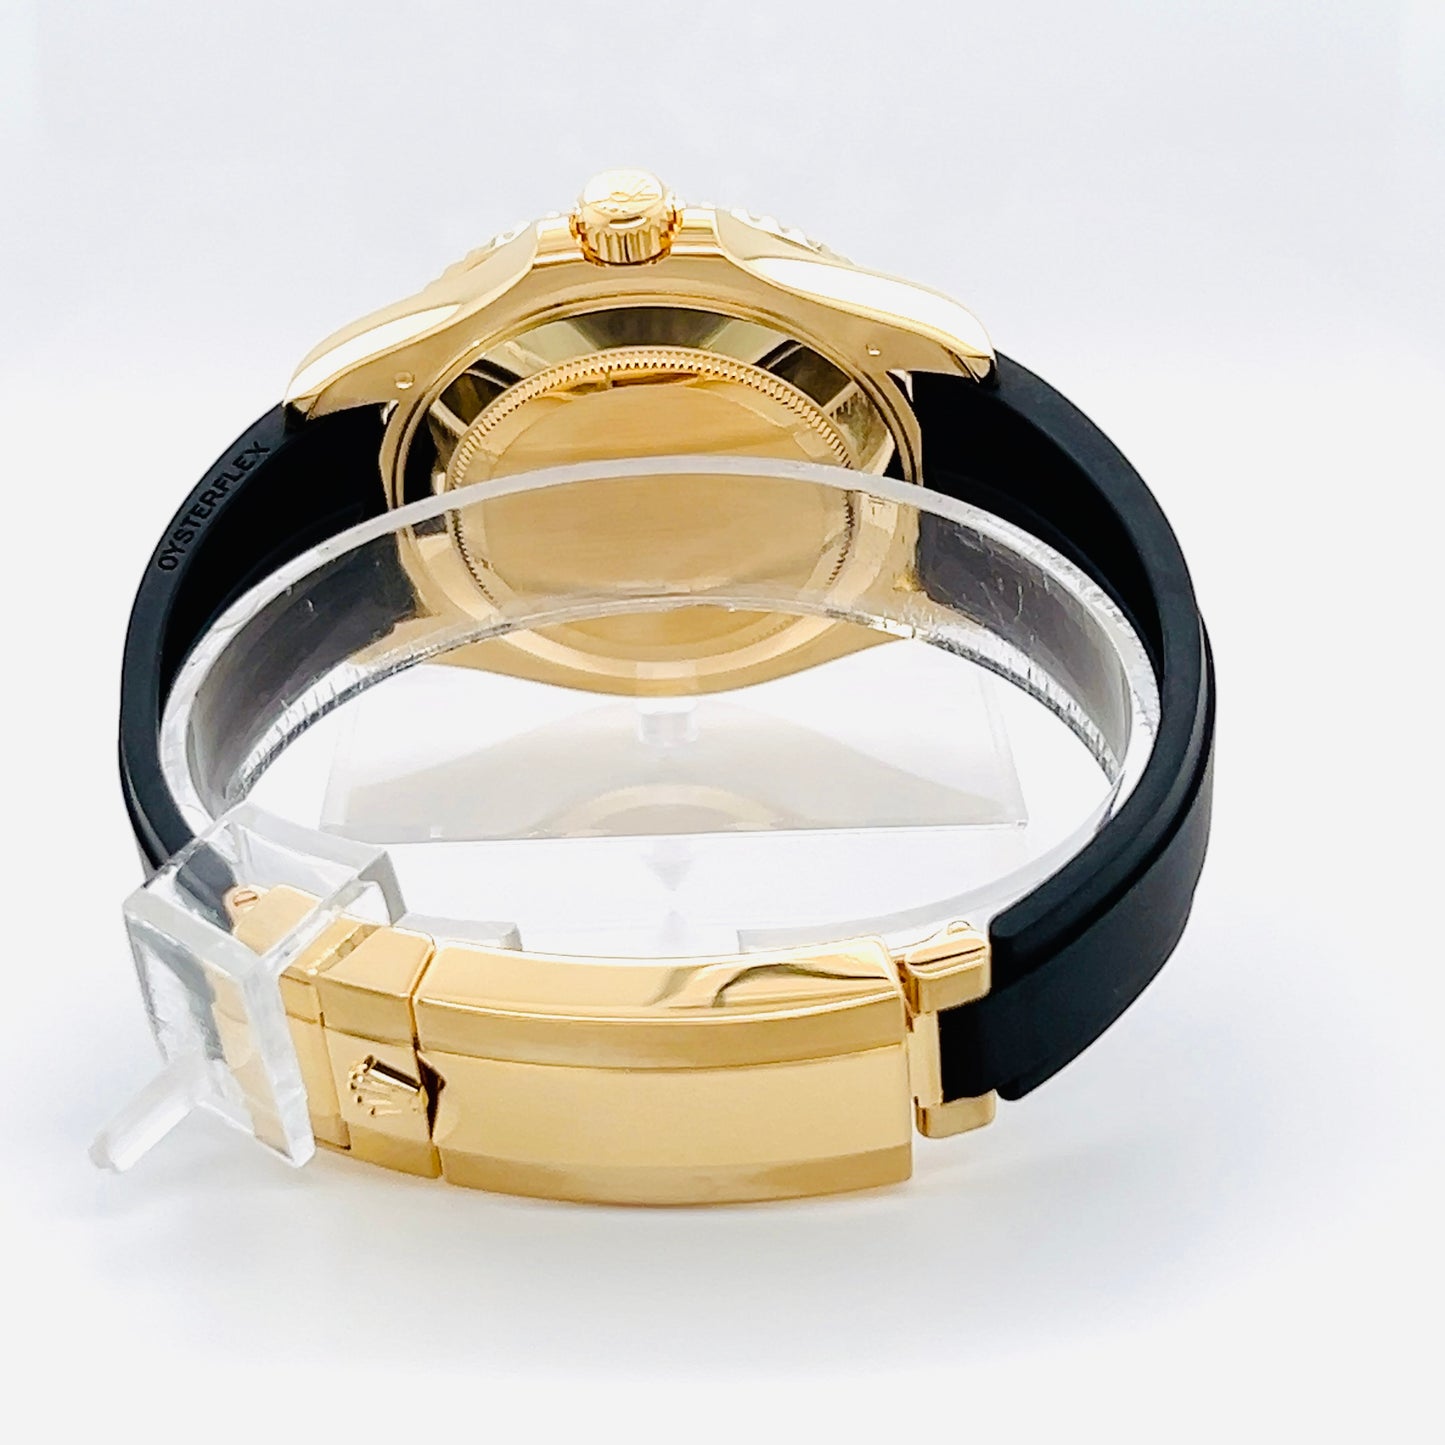 Rolex Yacht-Master 42mm Yellow Gold Black Dial Men's Watch Model # 226658